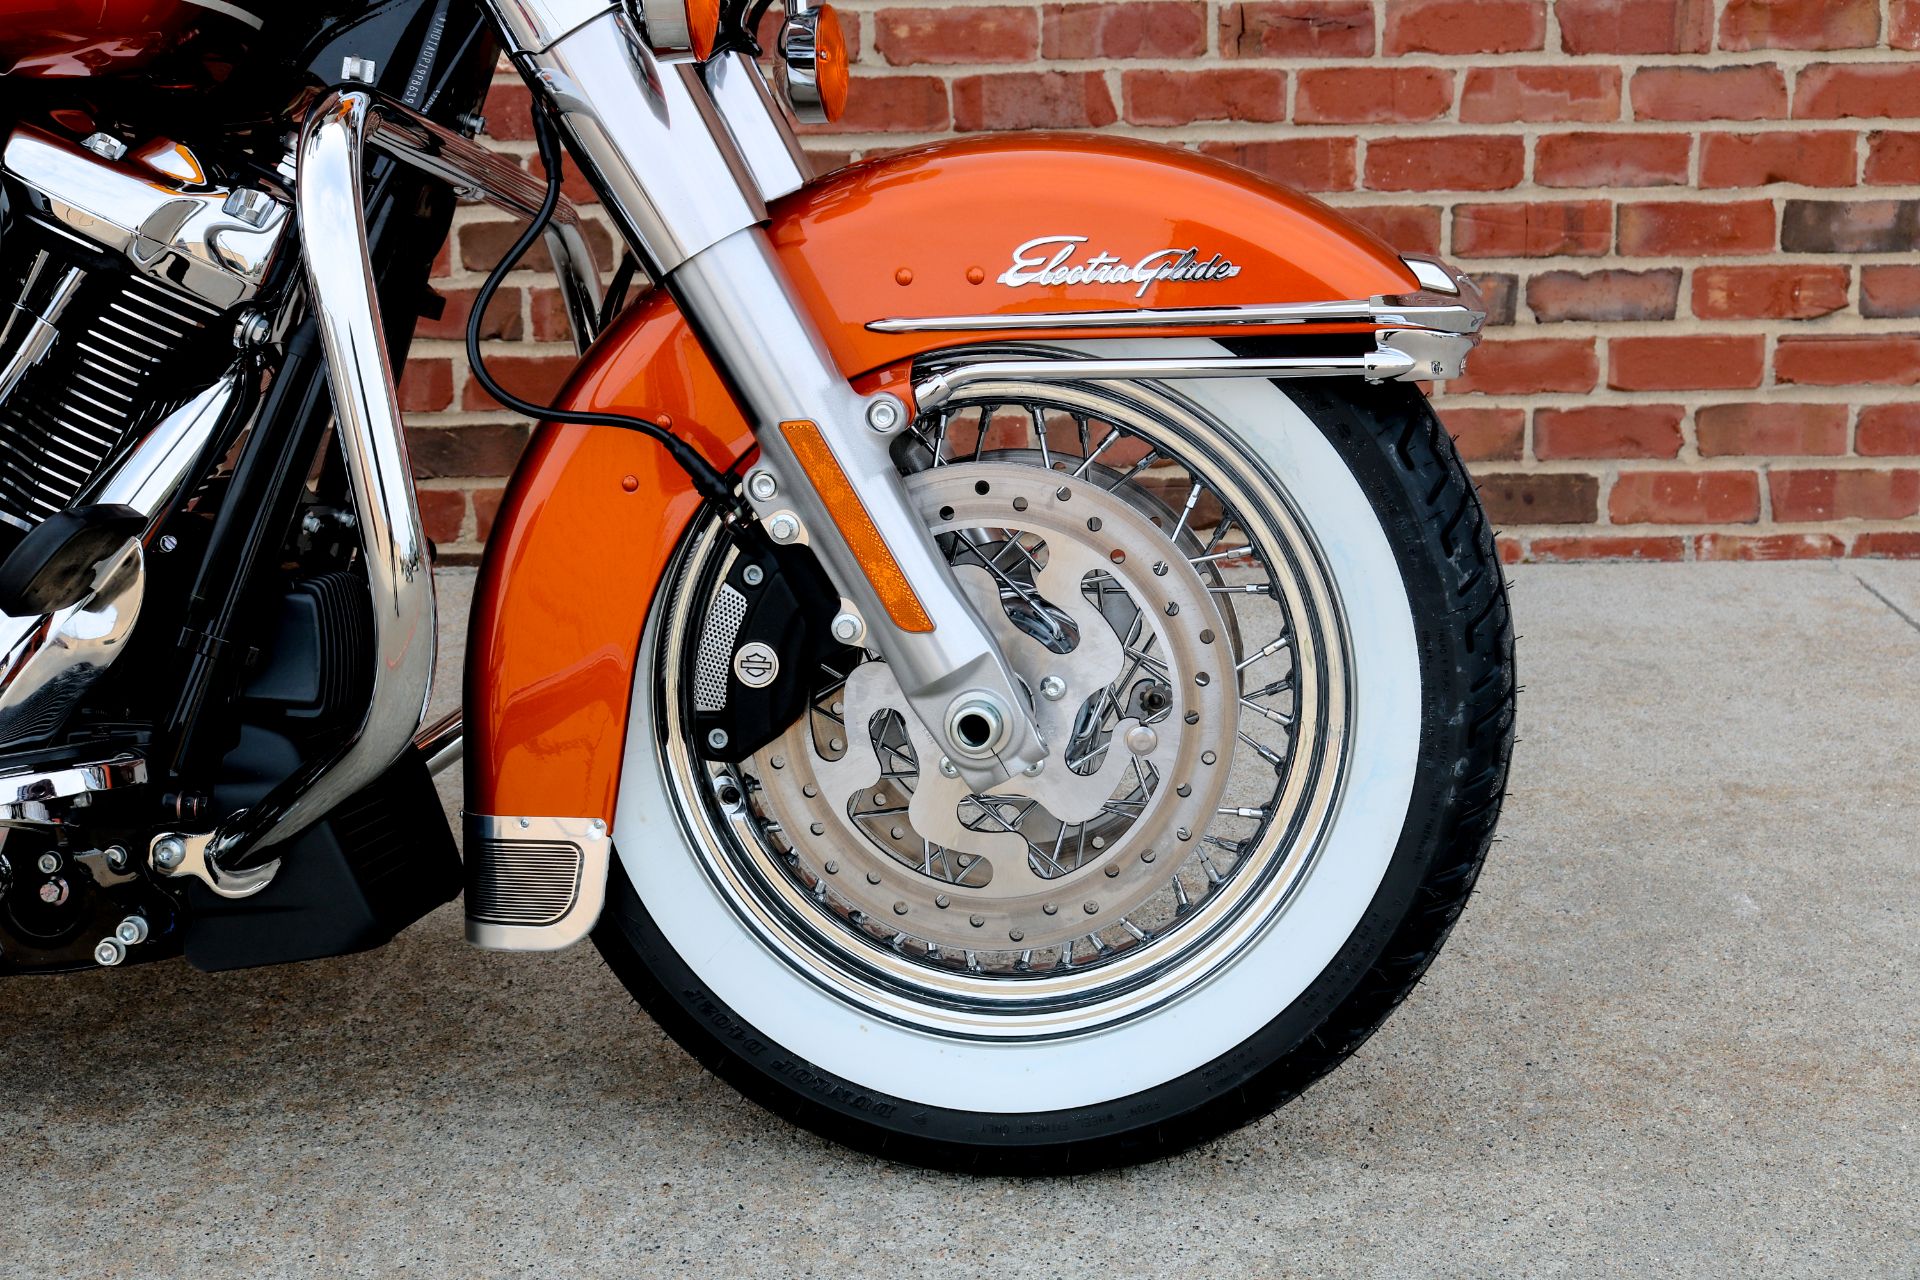 2023 Harley-Davidson Electra Glide® Highway King in Ames, Iowa - Photo 6